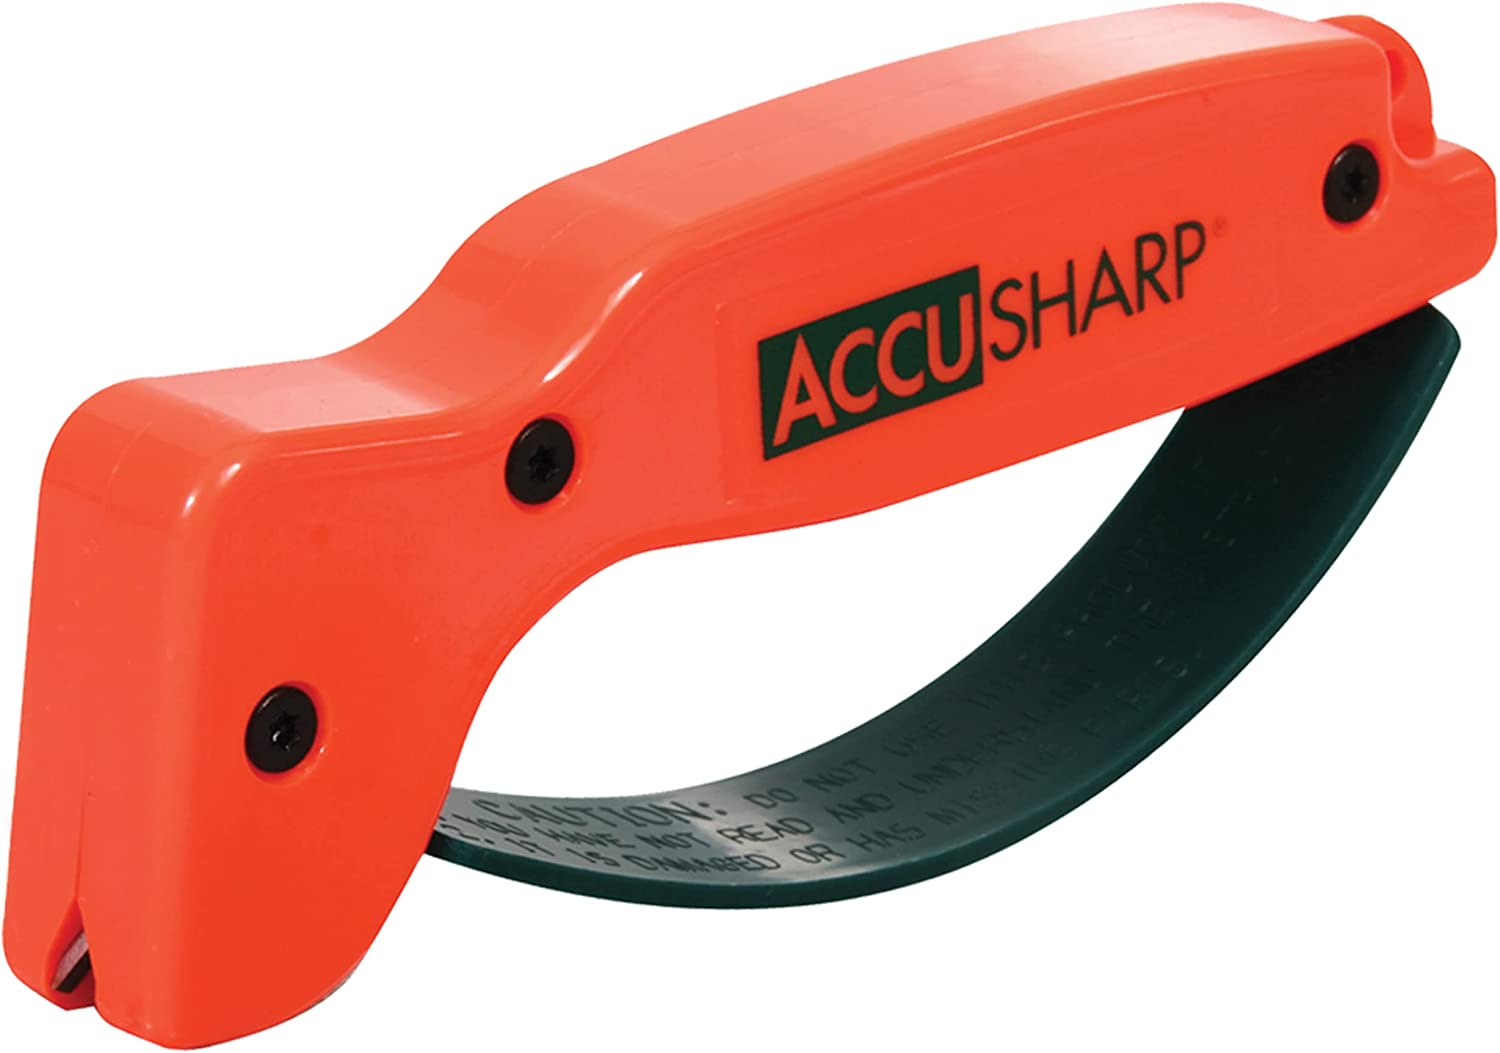 AccuSharp Knife & Tool Sharpener - Orange Knife [...]